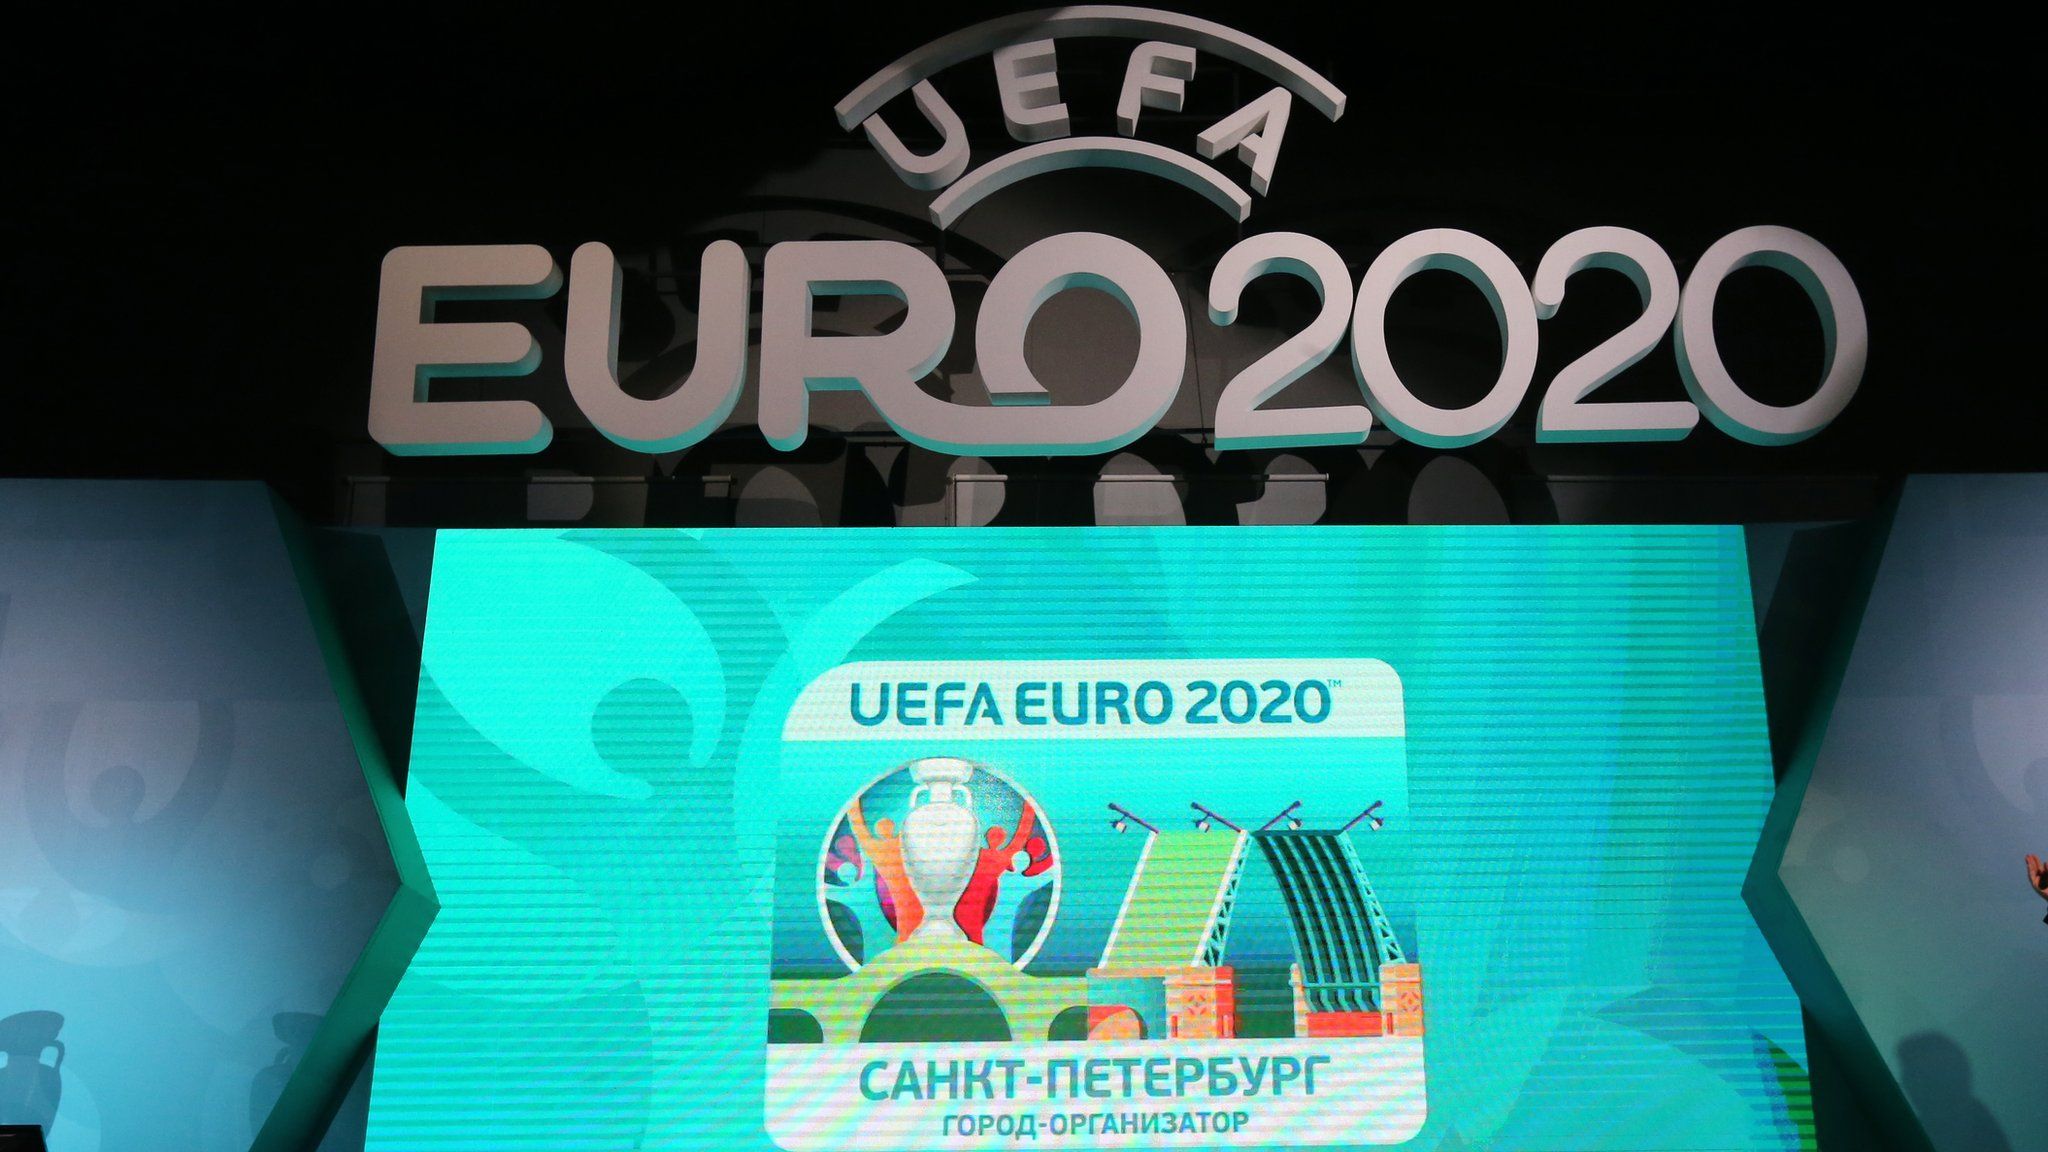 Uefa Euro 2020 launch